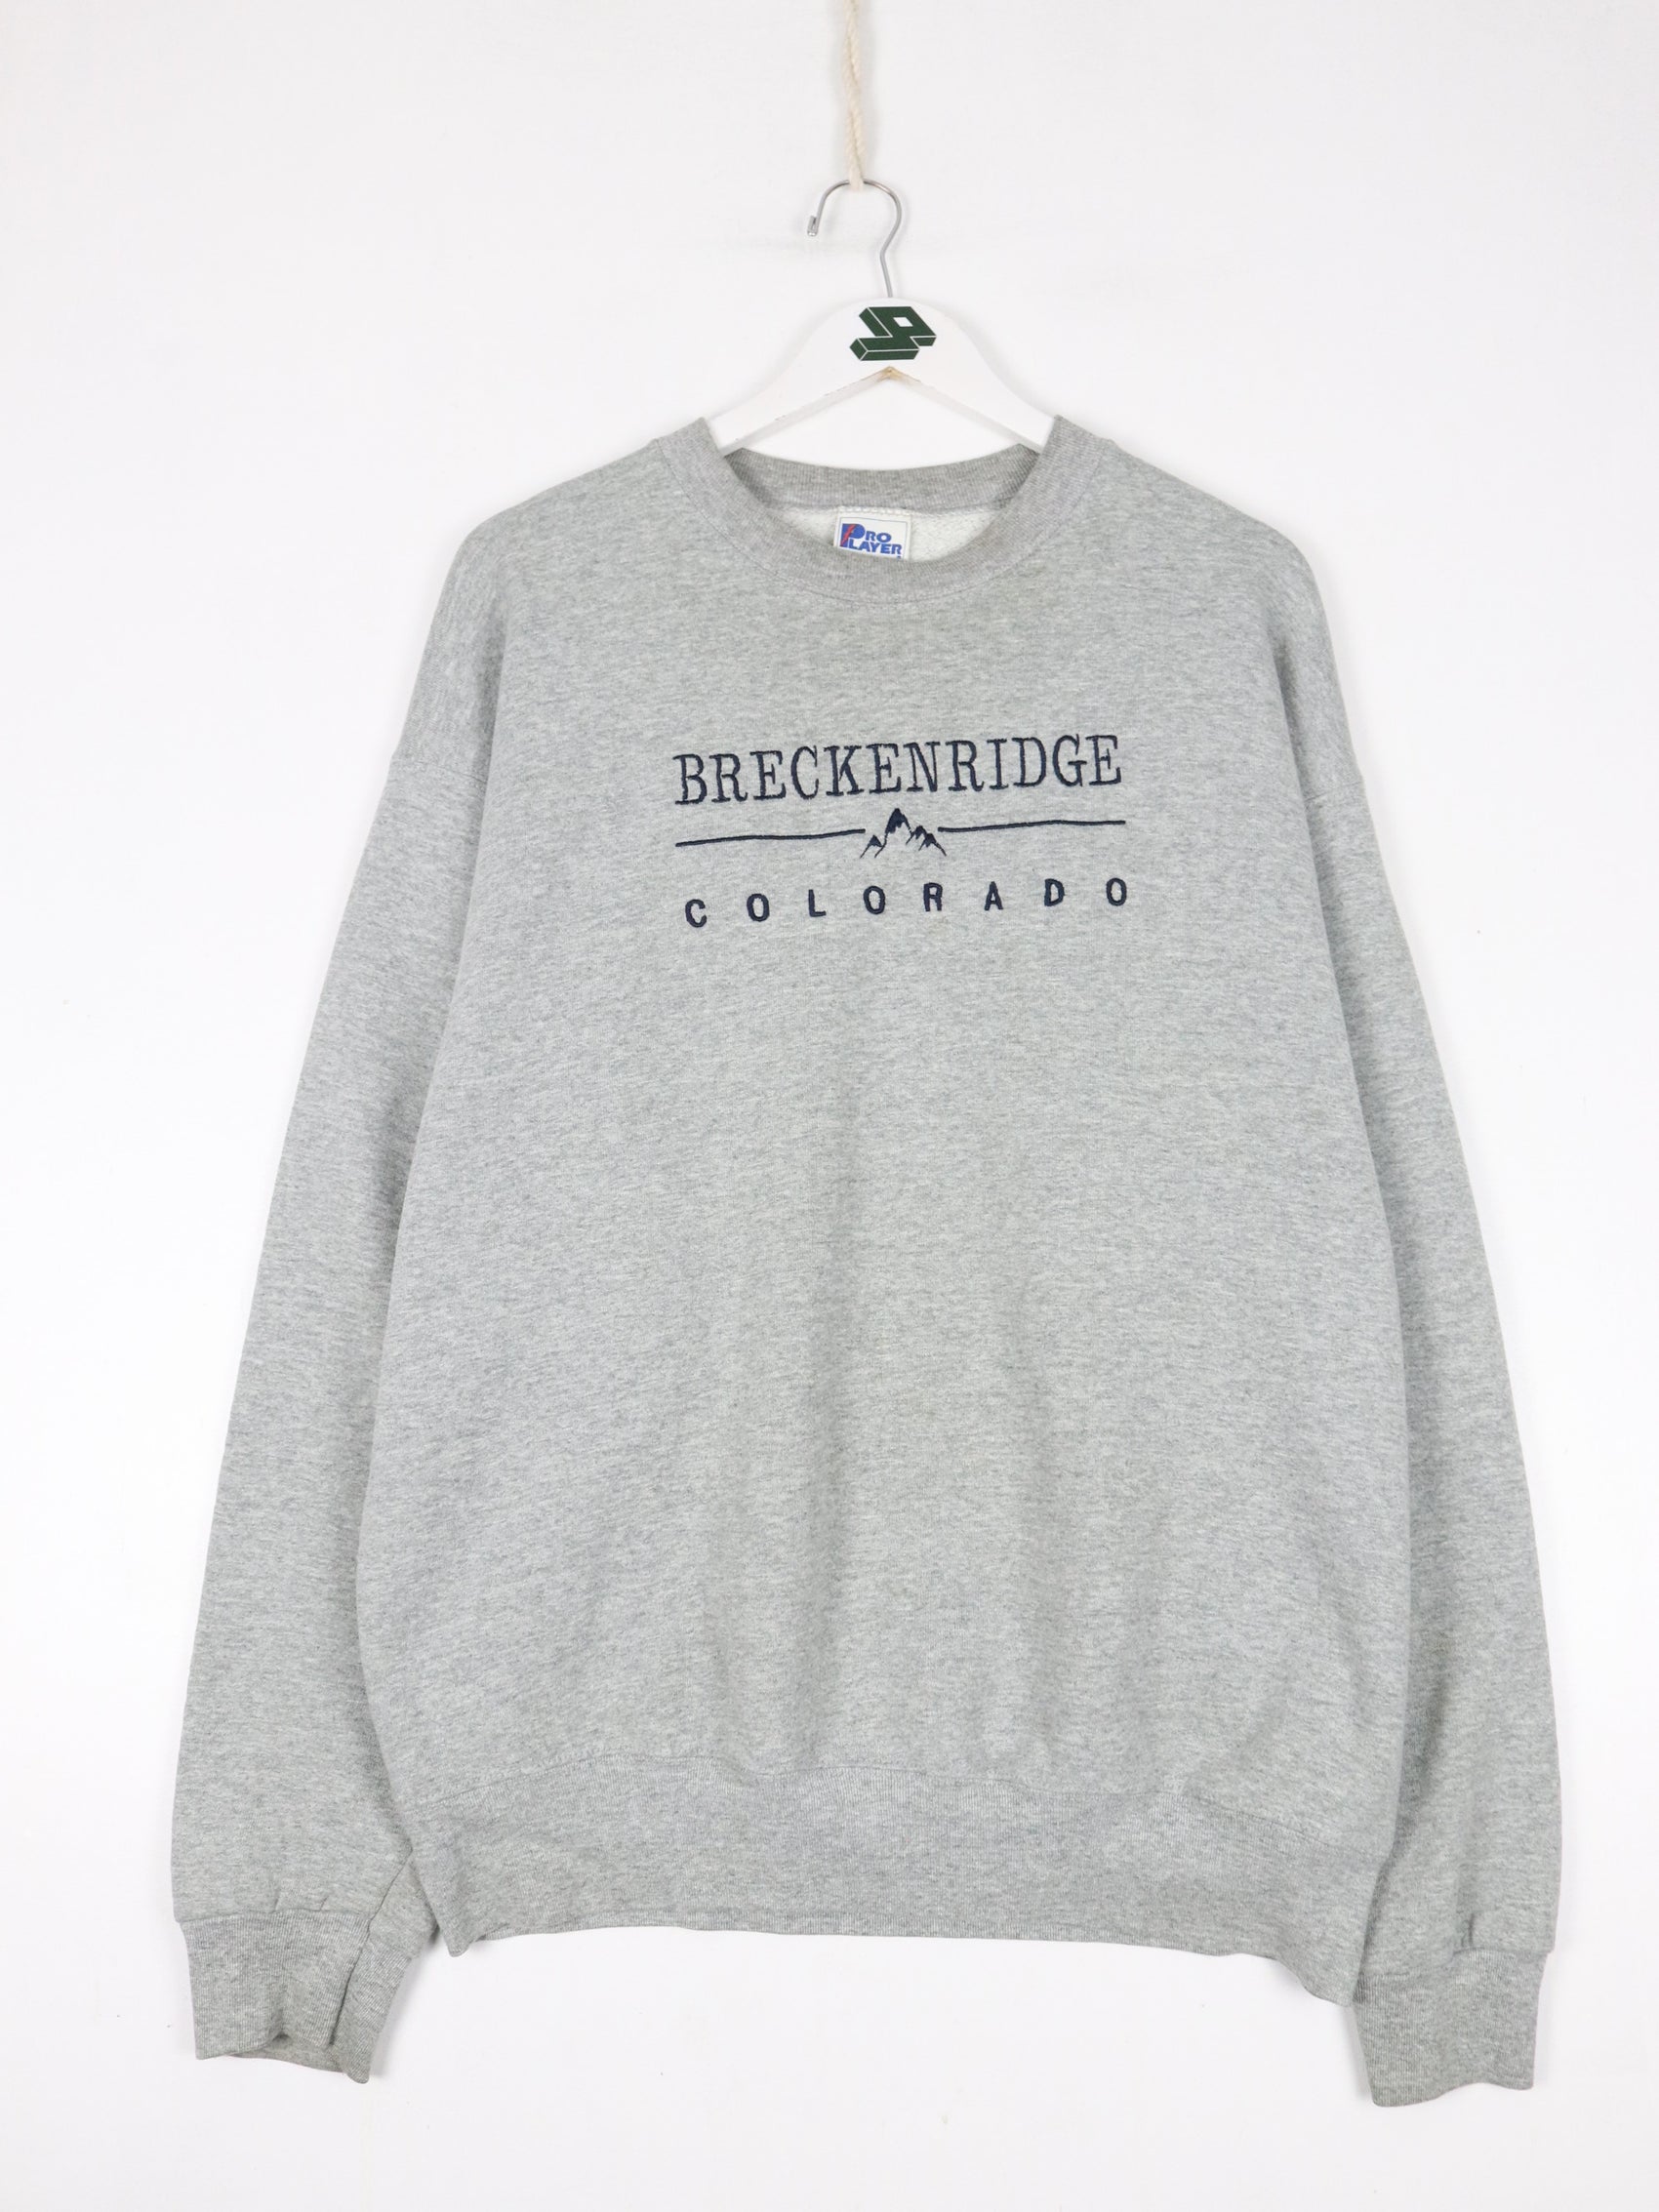 Vintage Breckenridge Sweatshirt Mens XL Grey Sweater